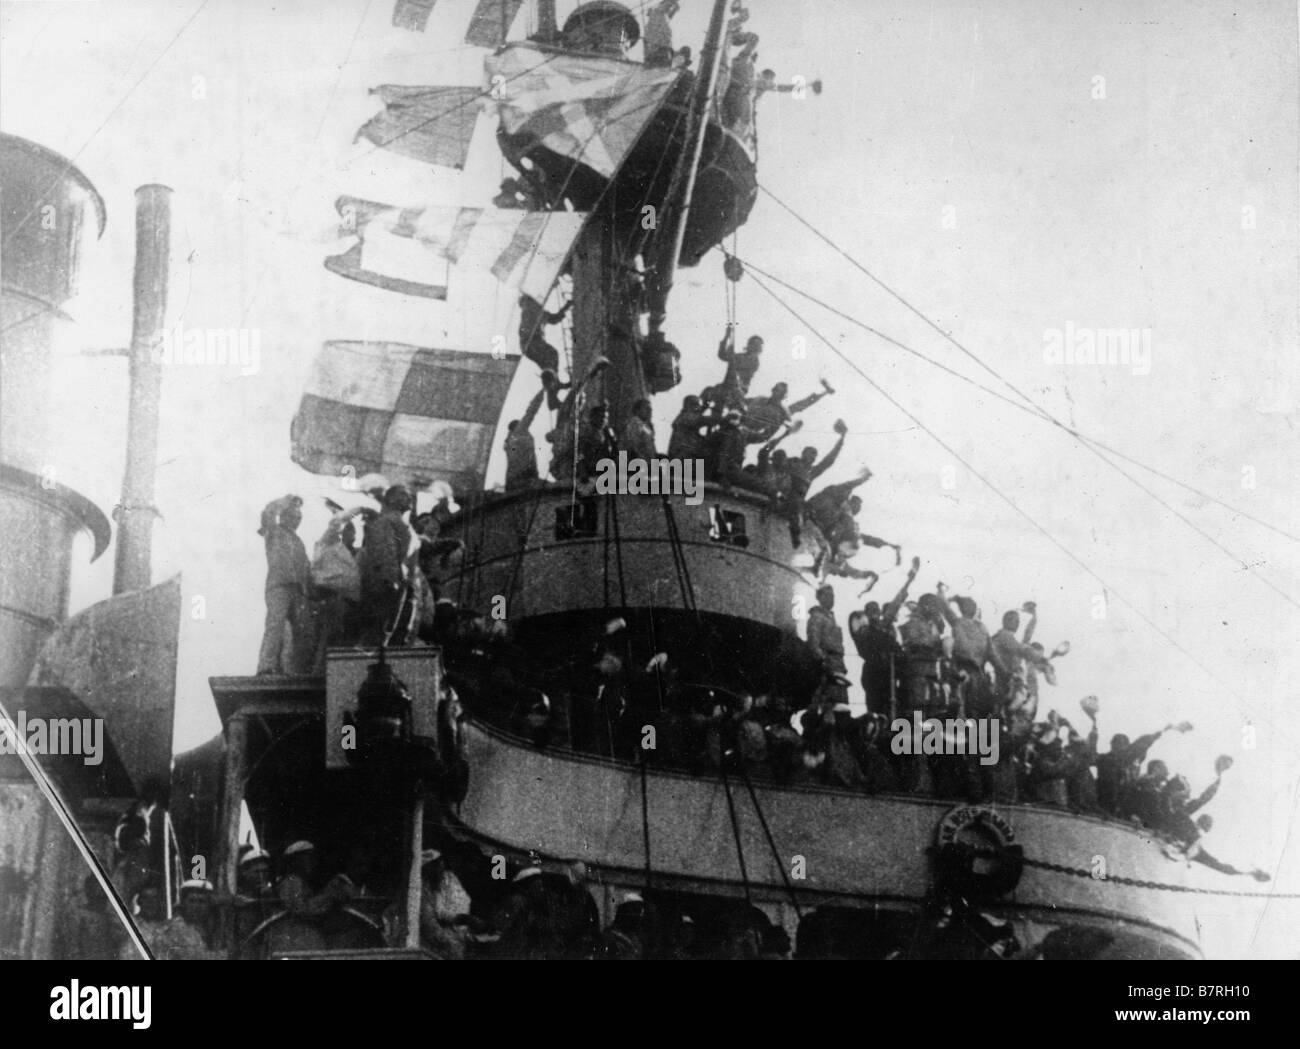 Bronenosets Potyomkin  Battleship Potemkin Year: 1925 - Soviet Union Directors : Grigori Aleksandrov, Sergei M. Eisenstein Stock Photo